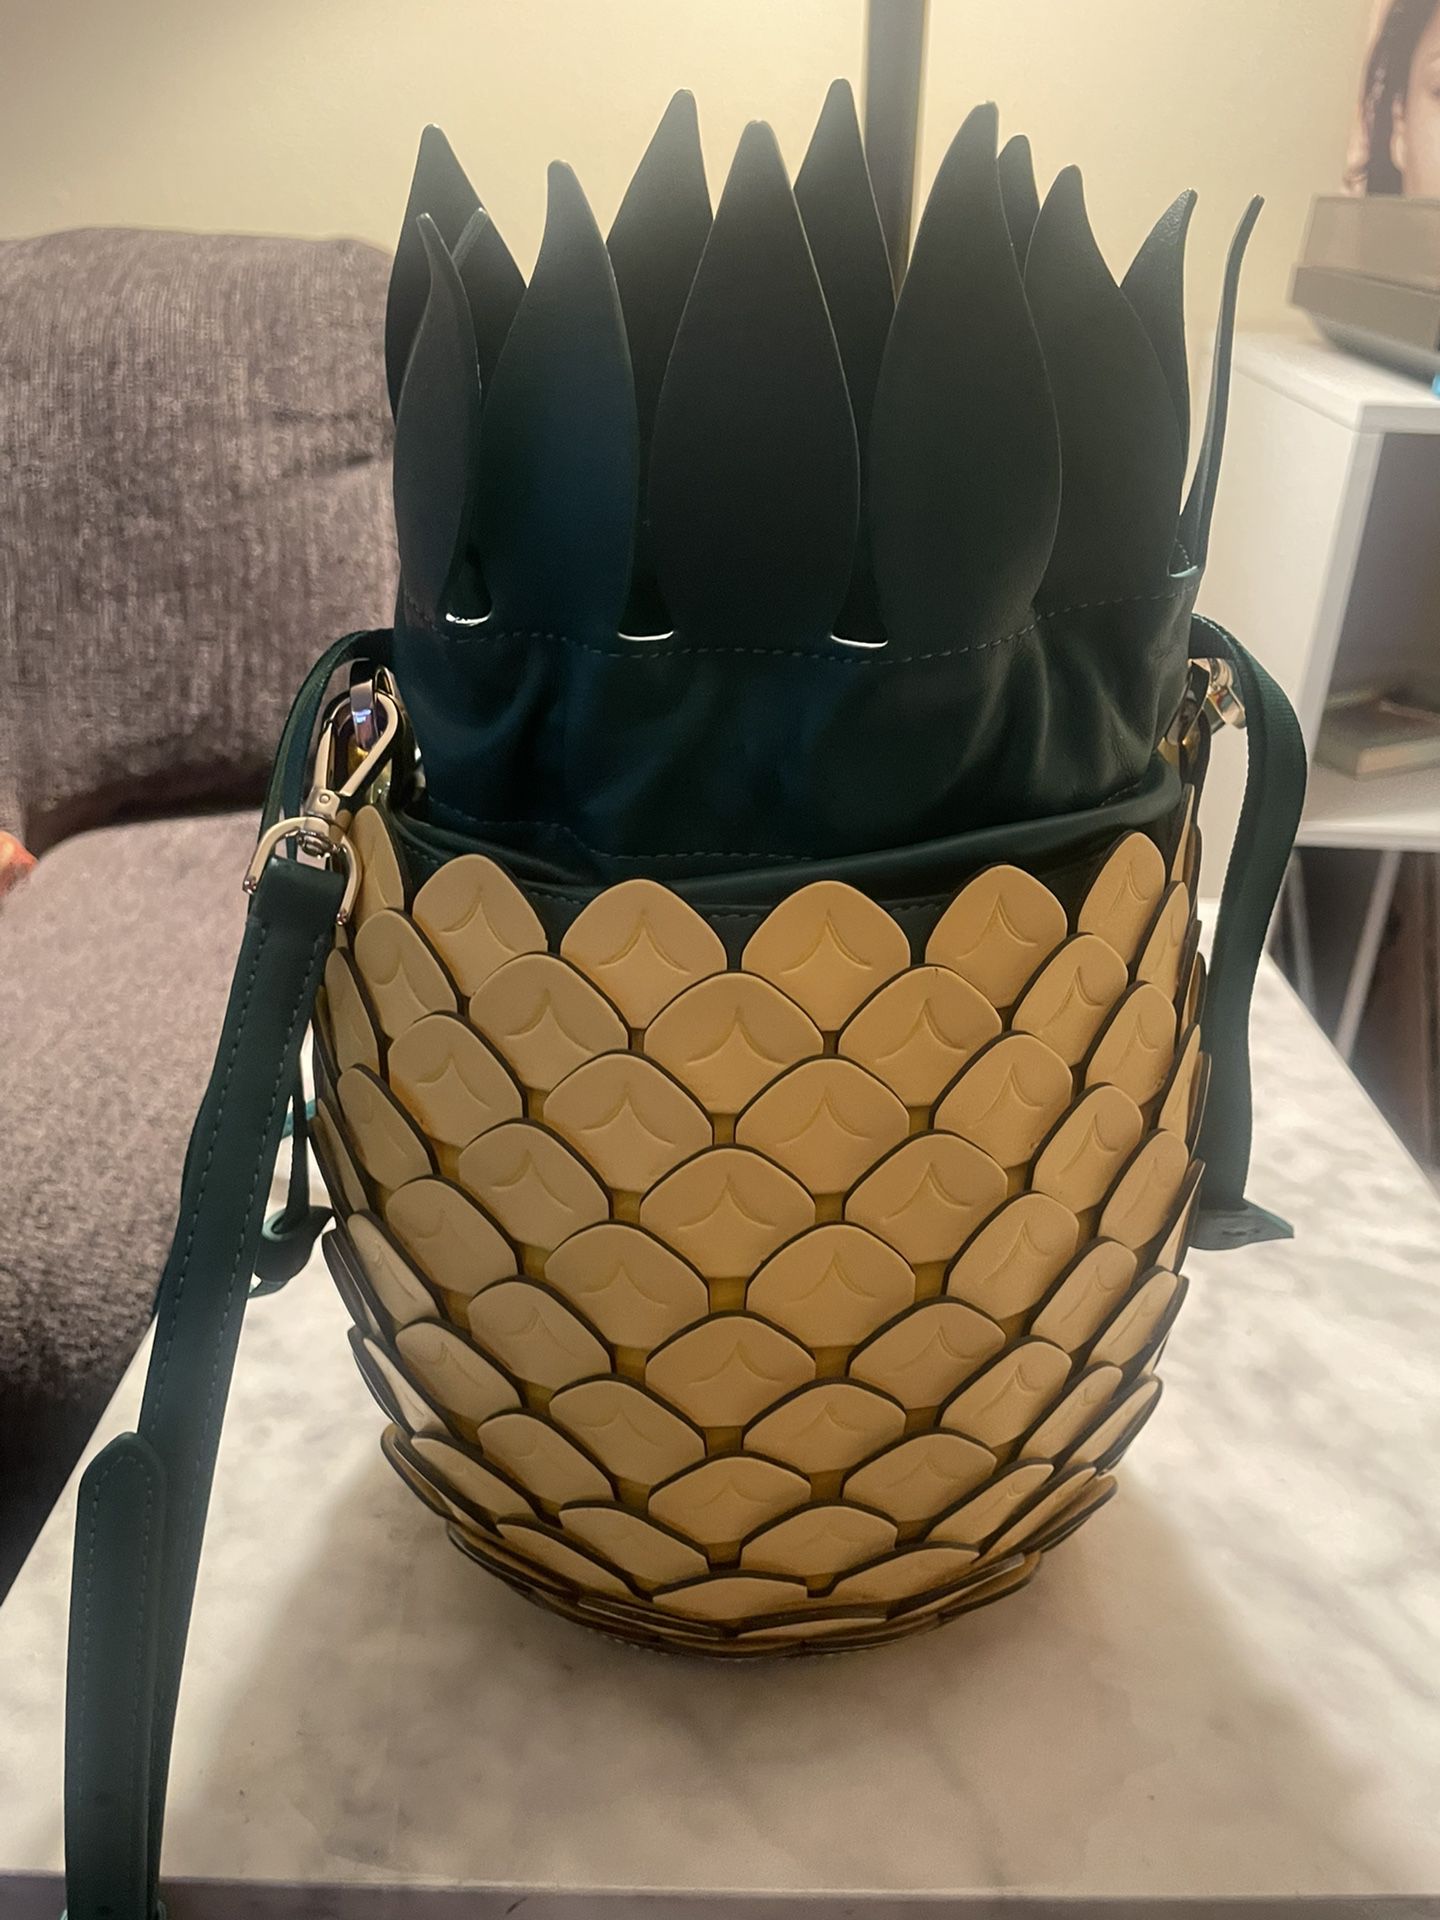 Kate Spade Pineapple Bag